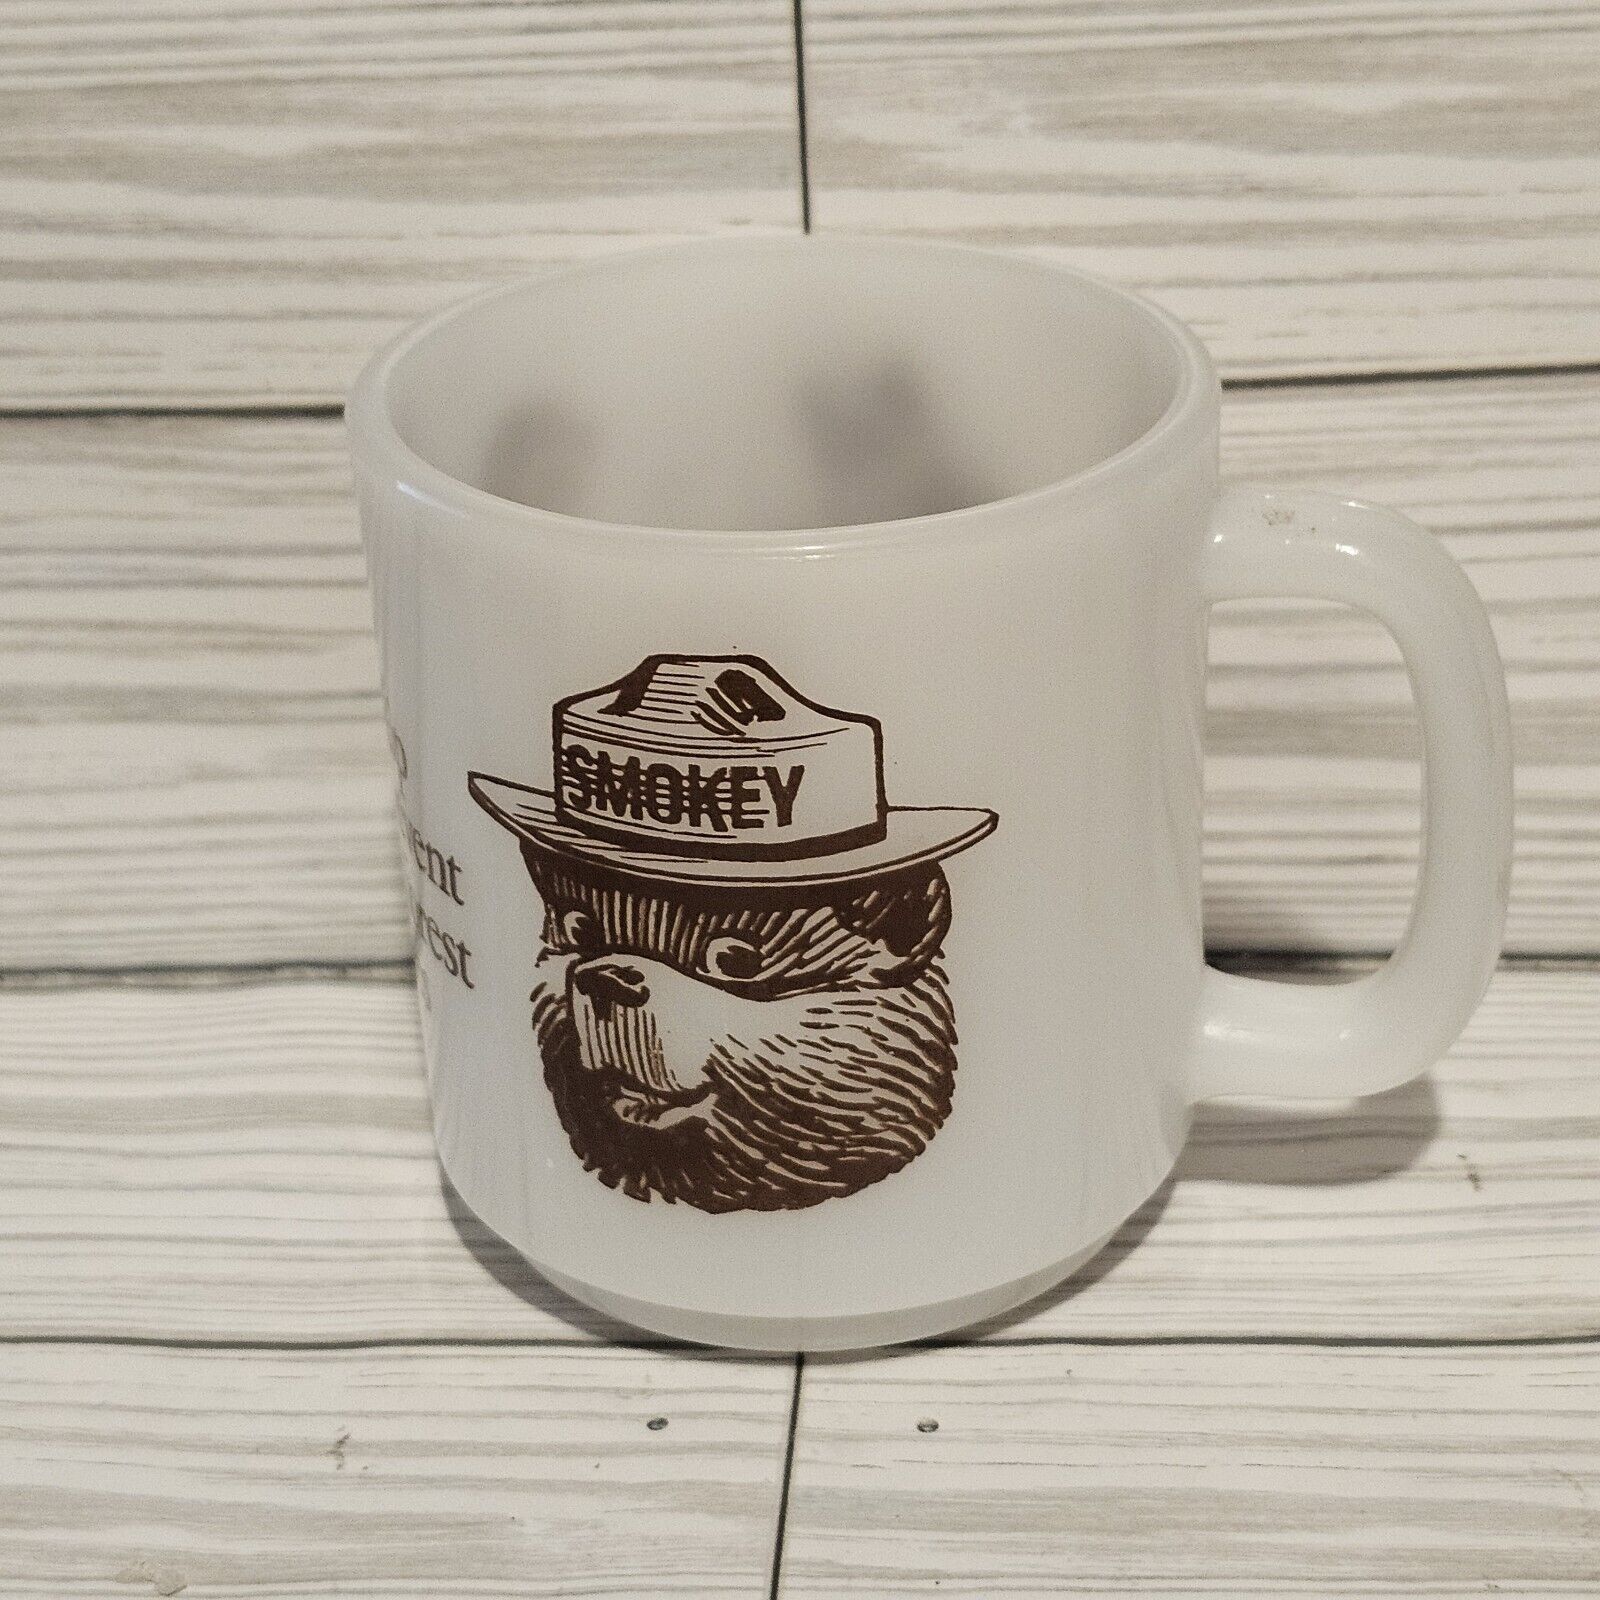 Vintage Glasbake Smokey the Bear Milk Glass Mug Cup Help Prevent Forest Fires